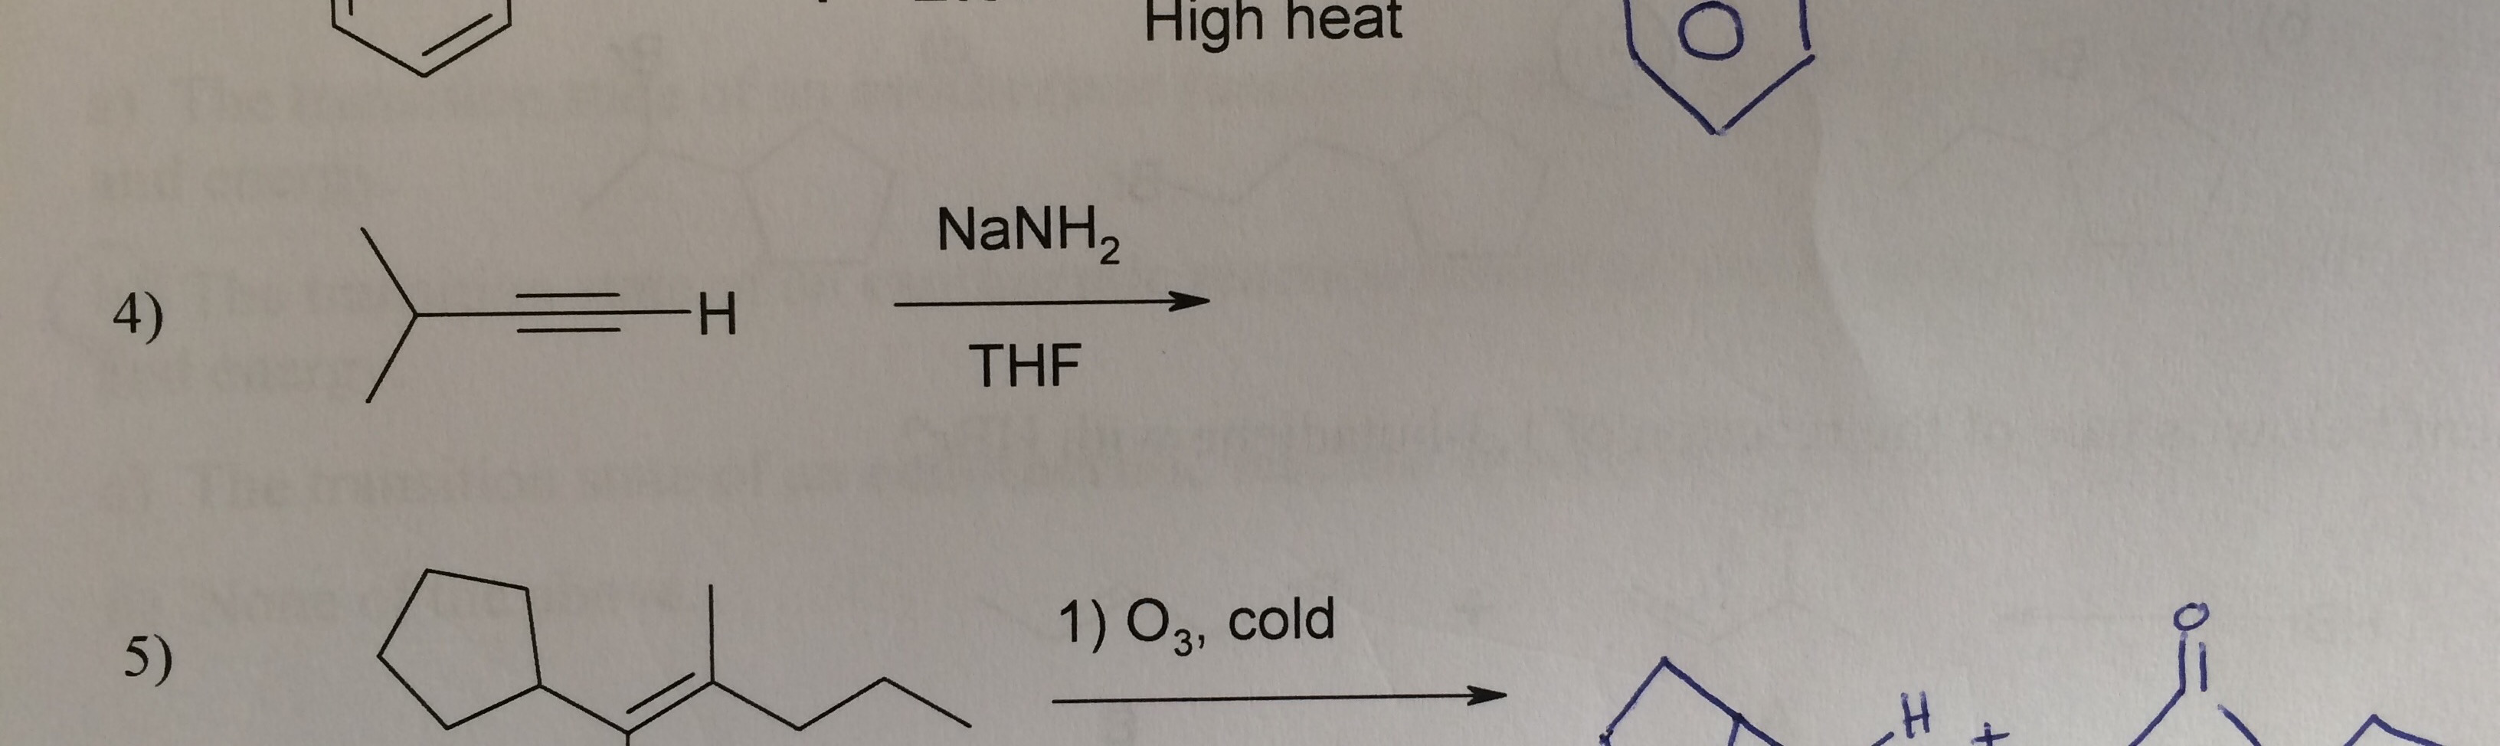 Solved High Heat Nanh Thf 1 O3 Cold